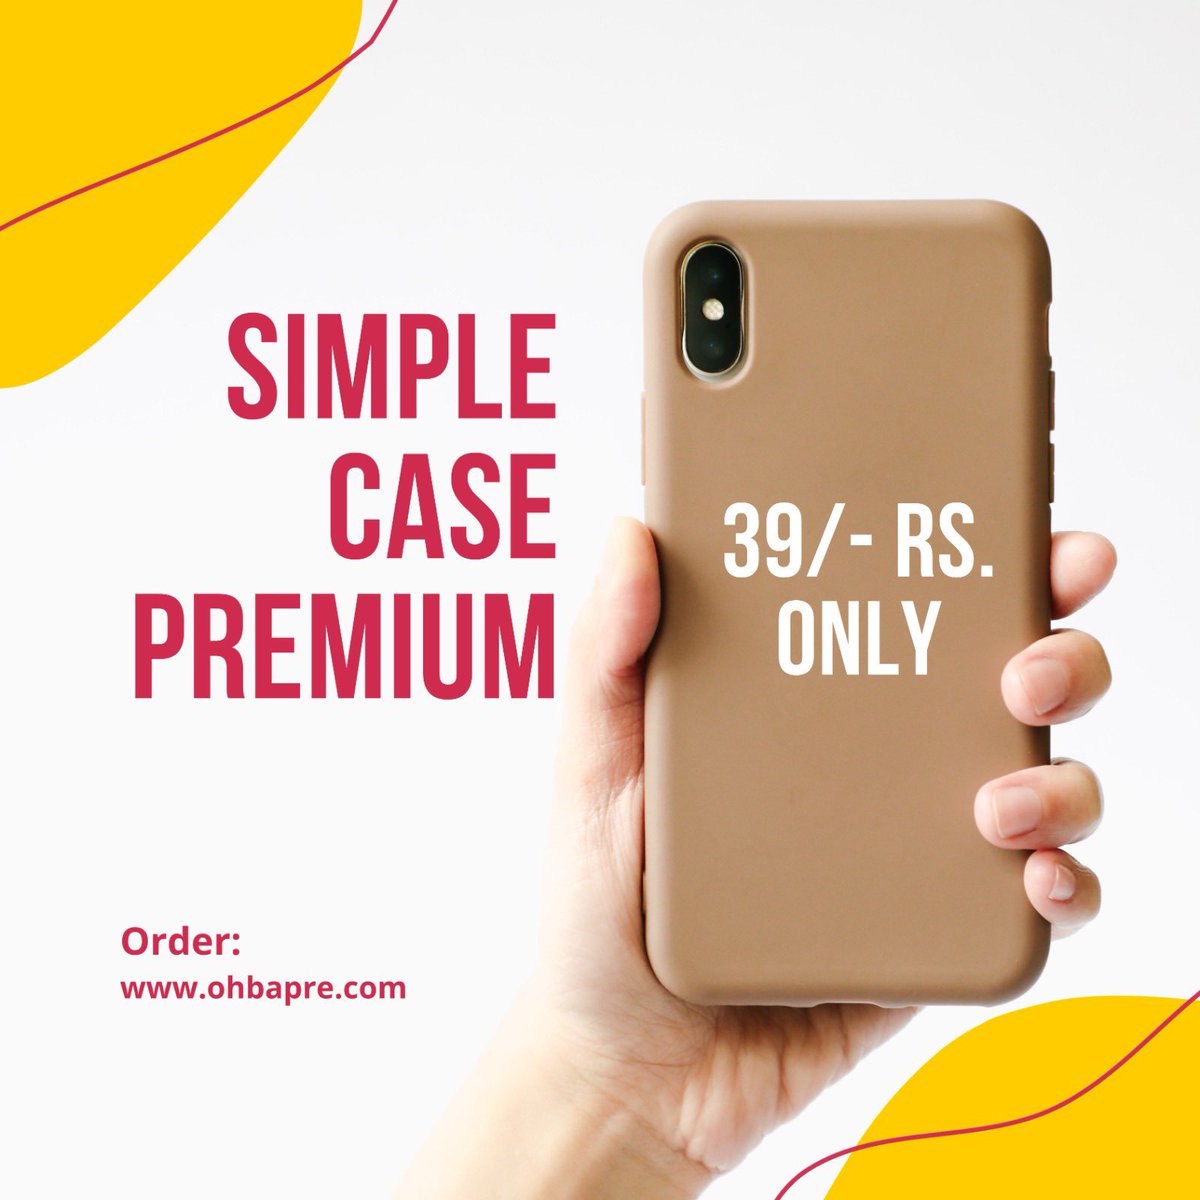 Simple case 39/- 

#ohbapre #mobilecase #mobilecover